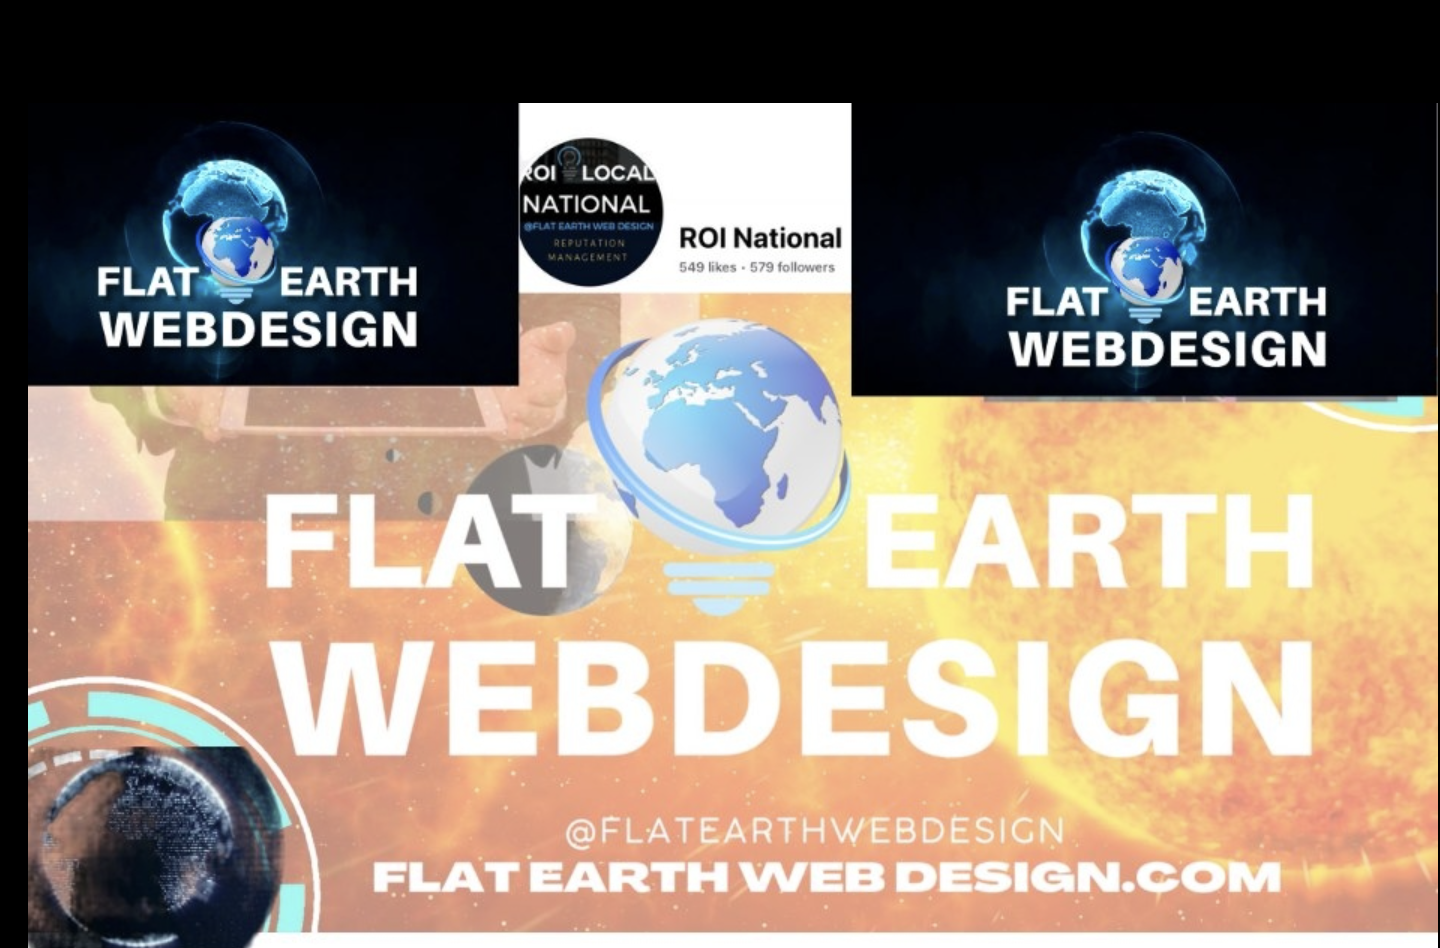 Flat Earth Webdesign